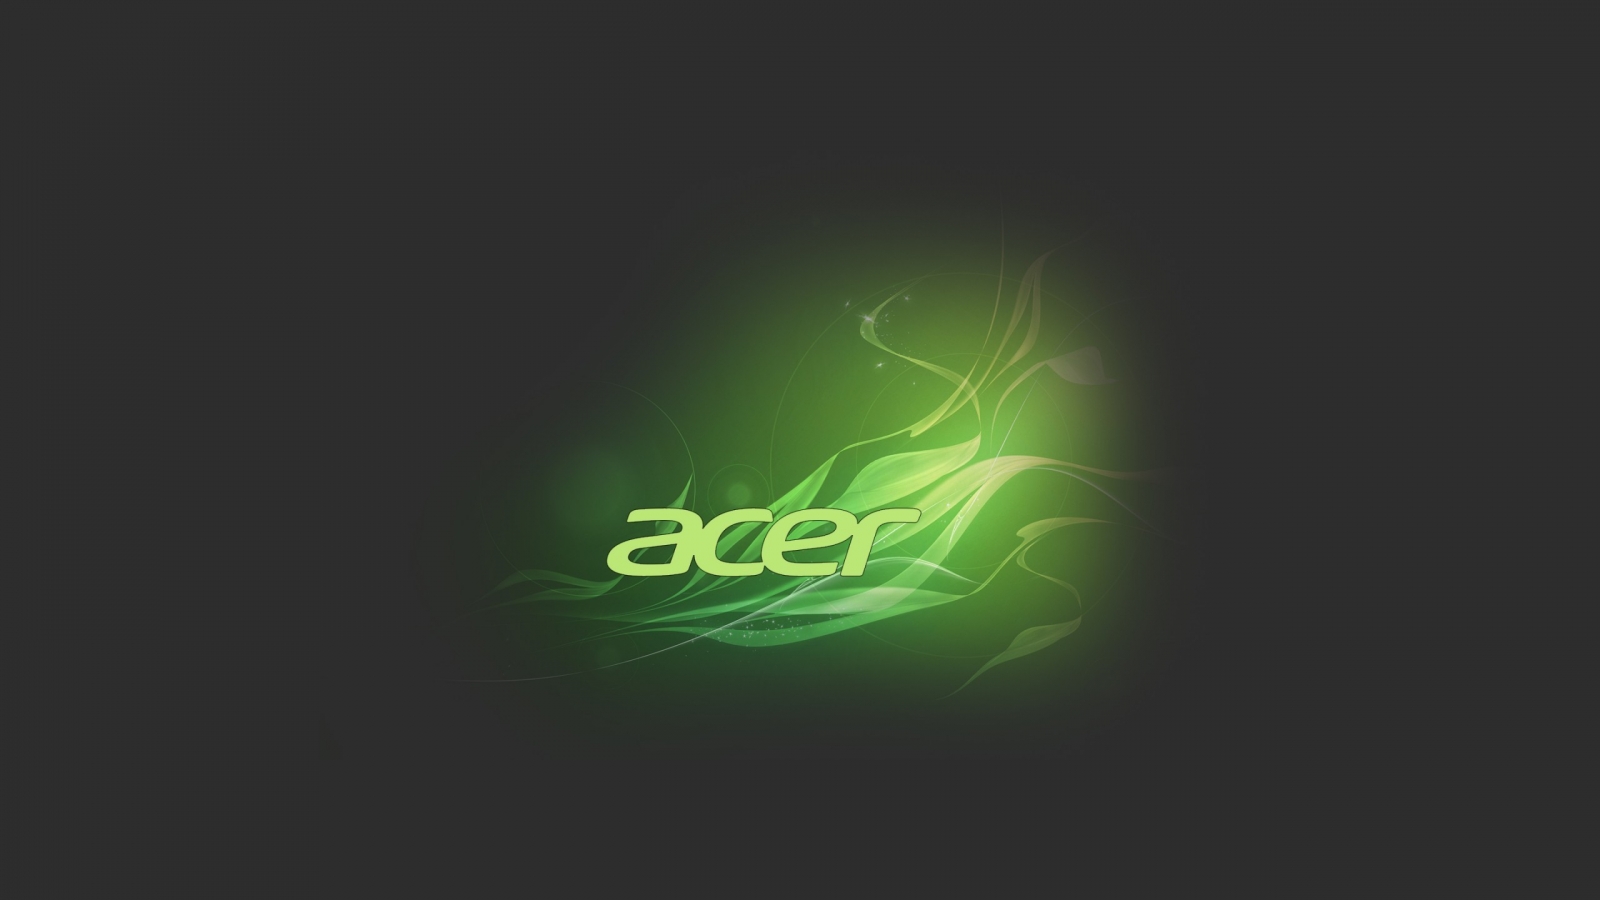 Acer Floral for 1600 x 900 HDTV resolution